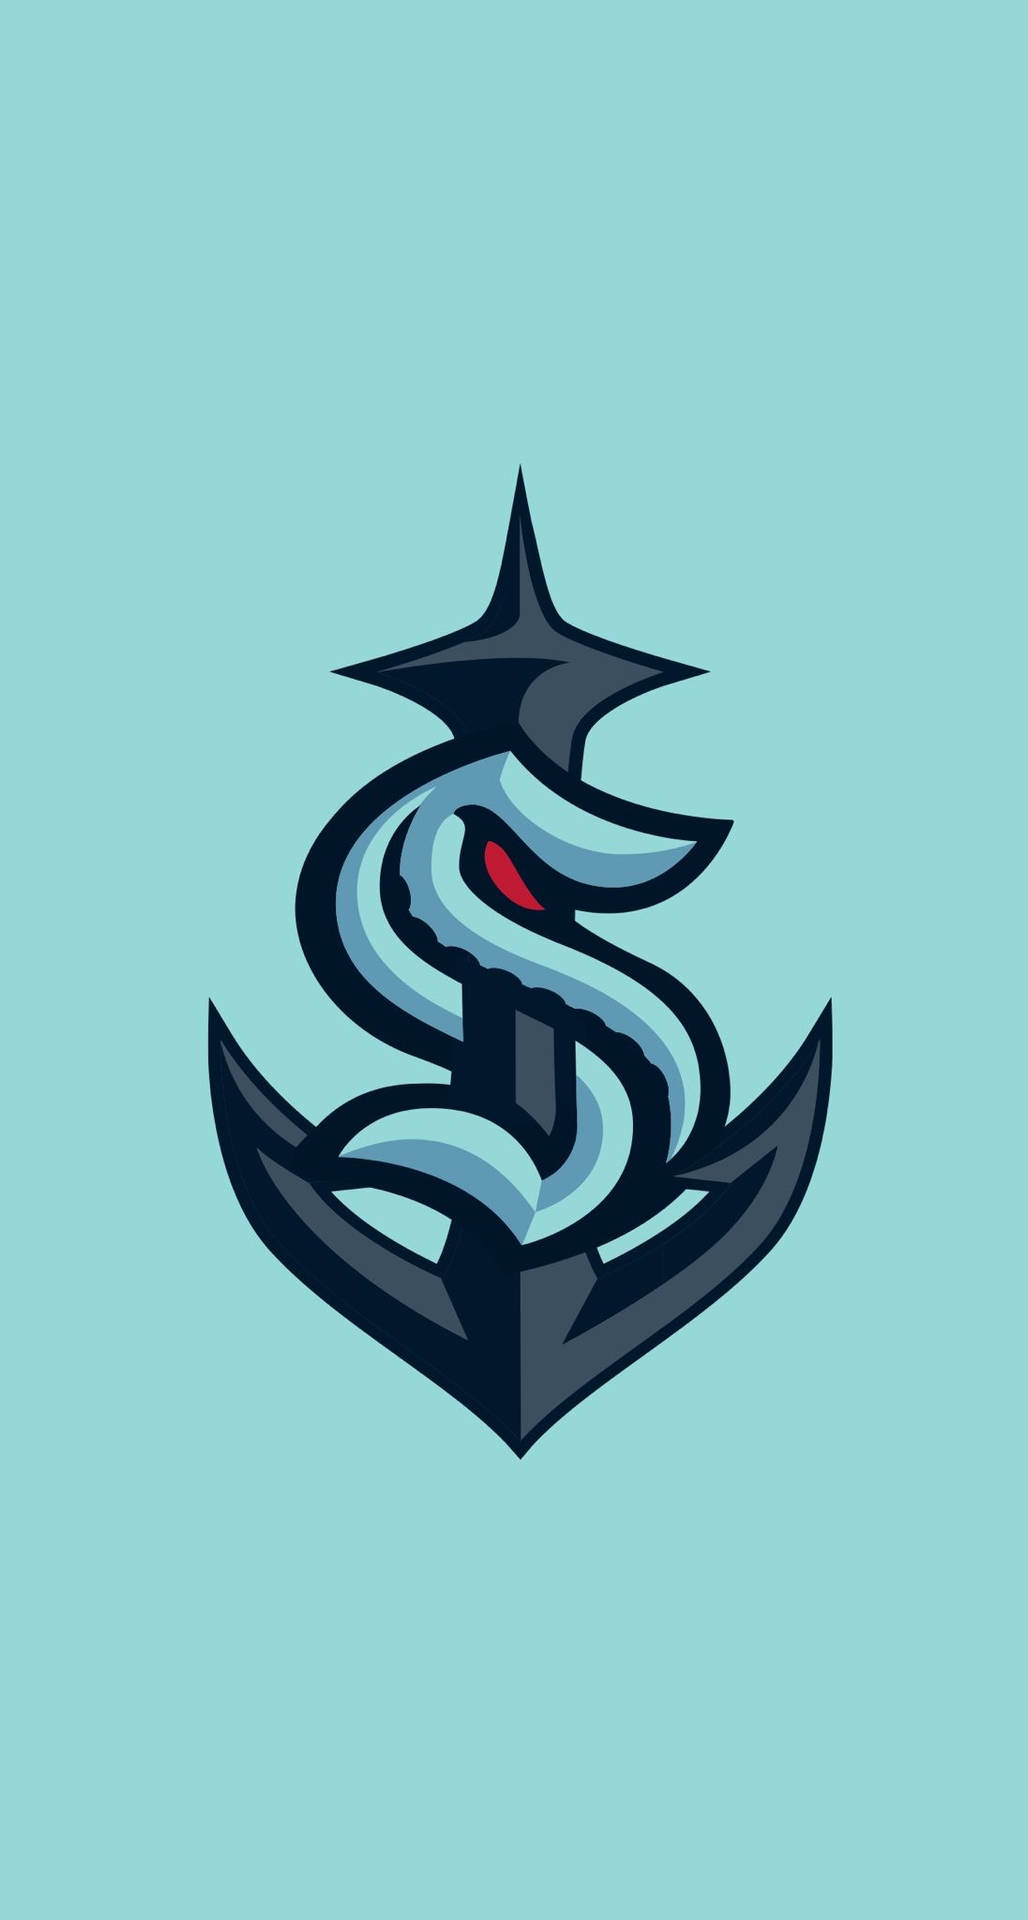 Embodying Power And Resilience - Seattle Kraken's Anchor Logo Background